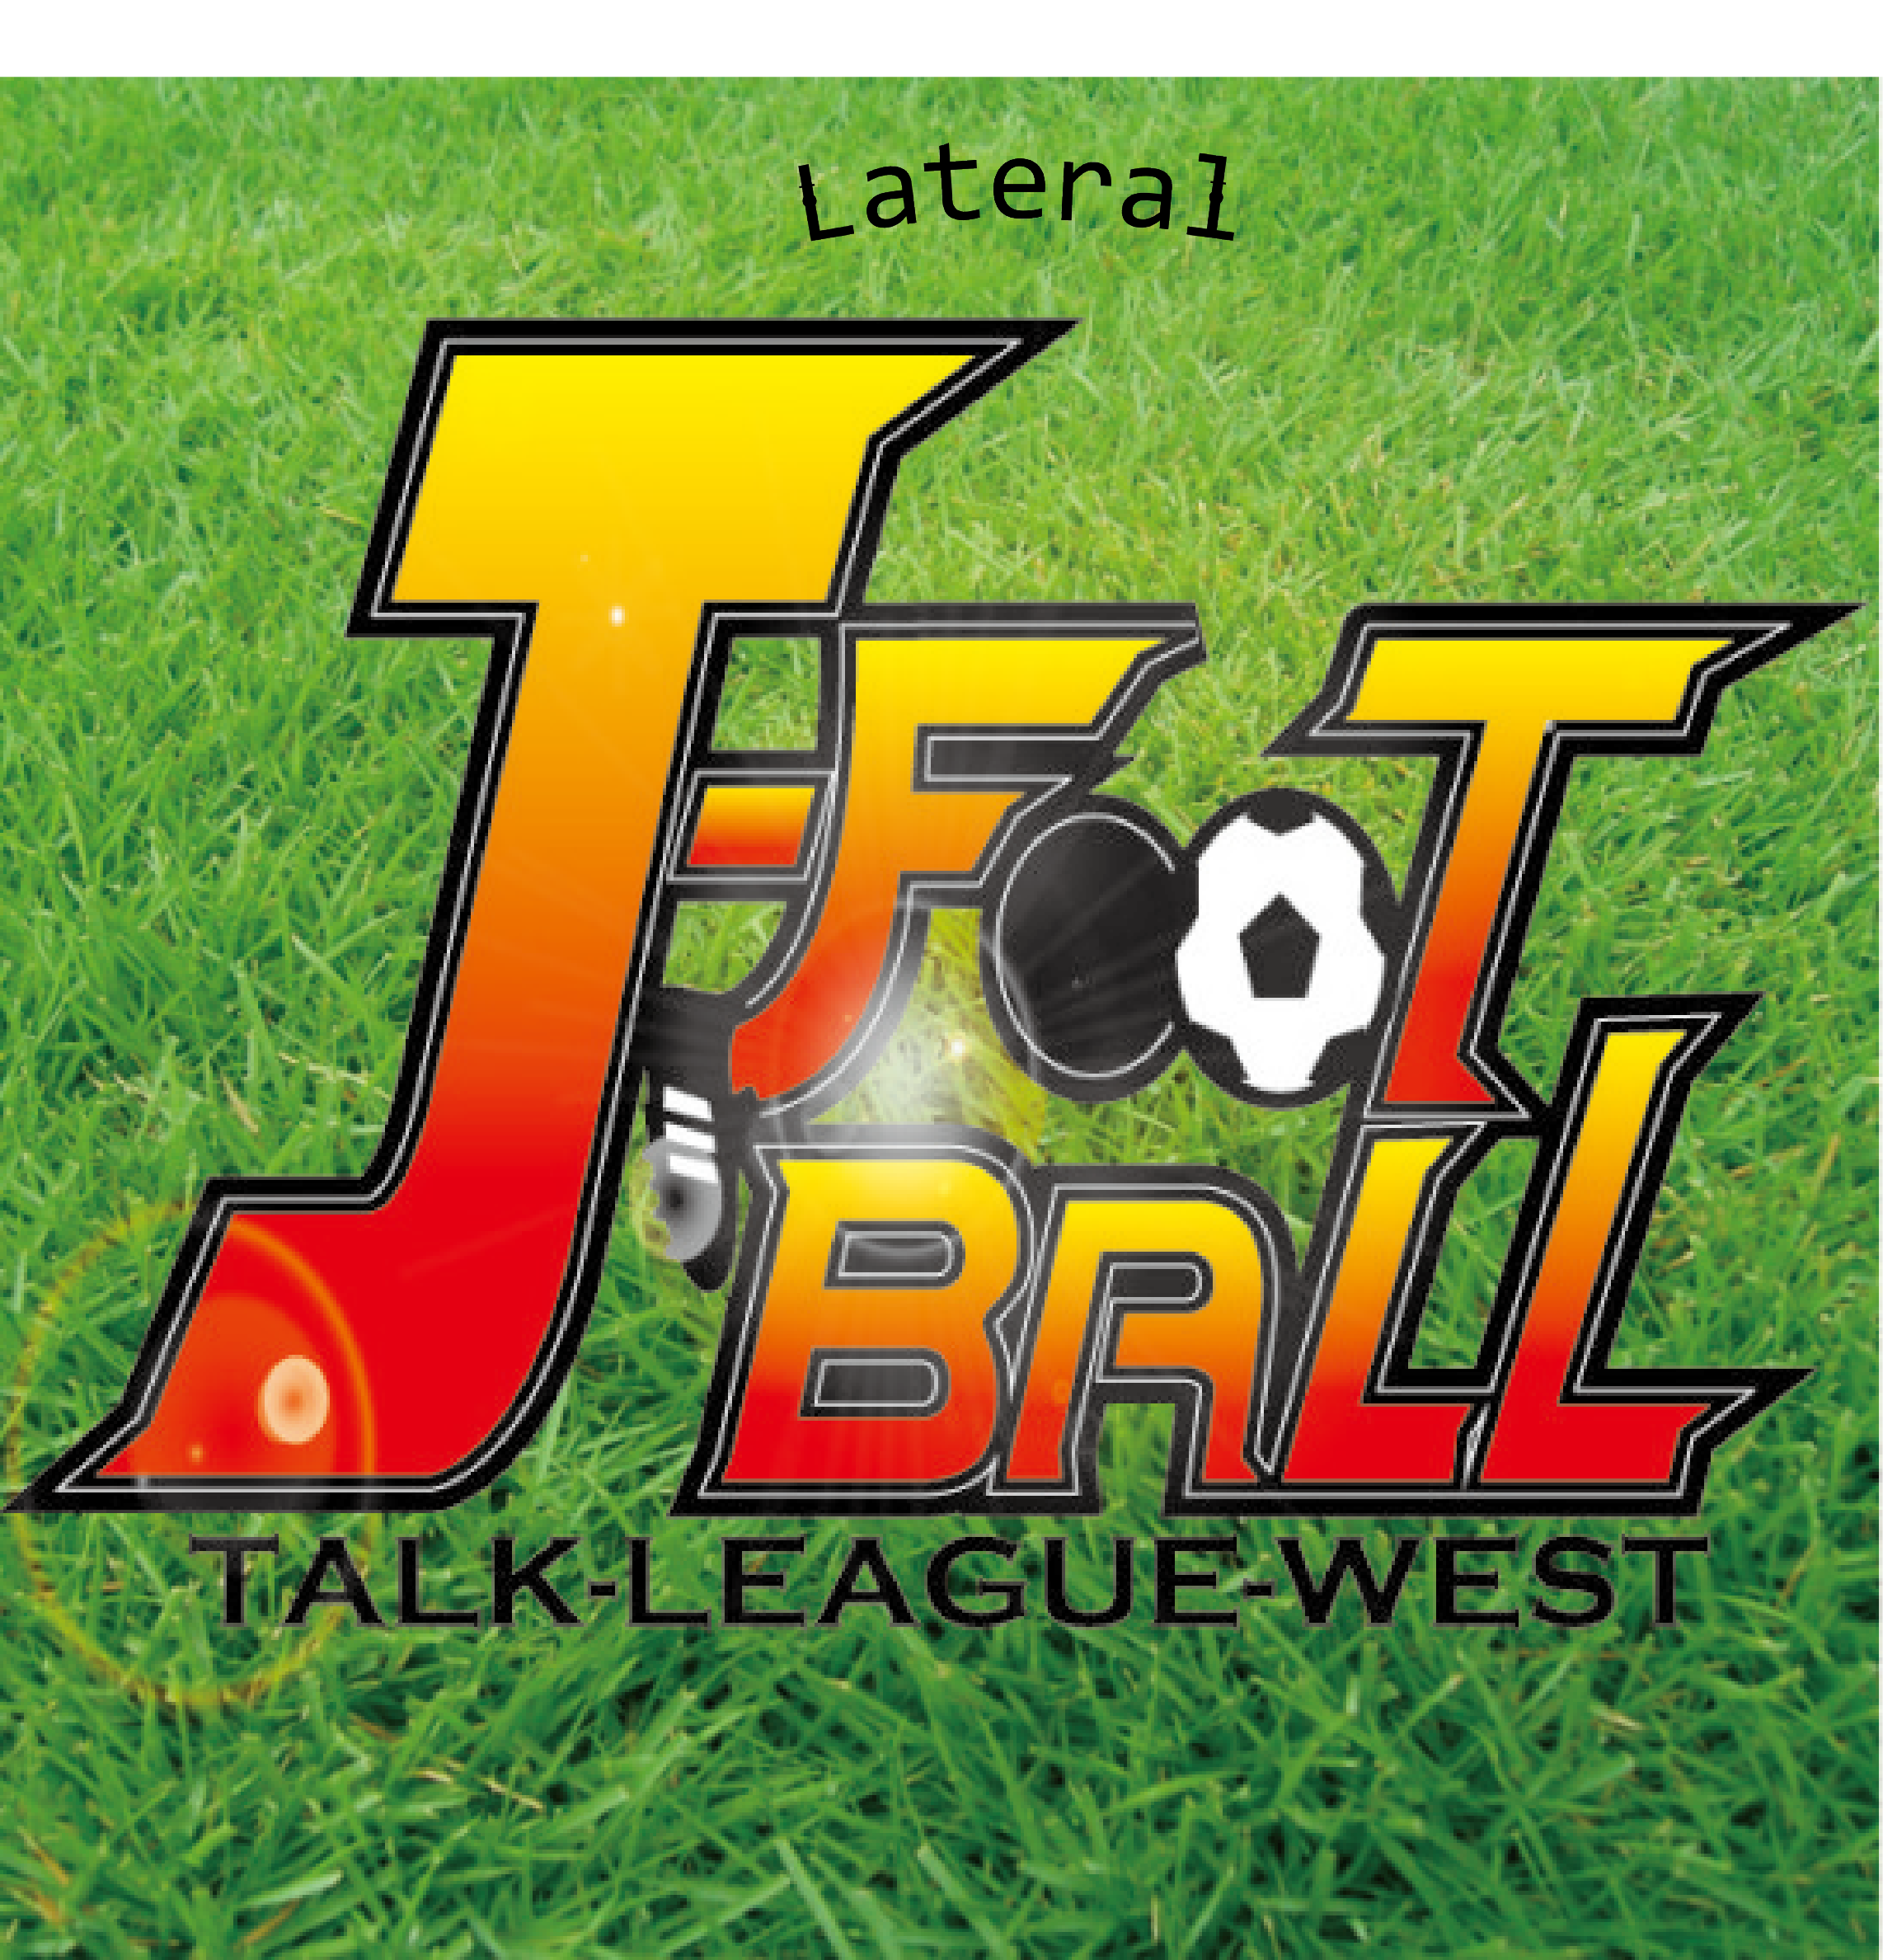 『J-FOOTBALL TALK-LEAGUE-WEST 番外編 〜2022年サッカー忘年会〜』